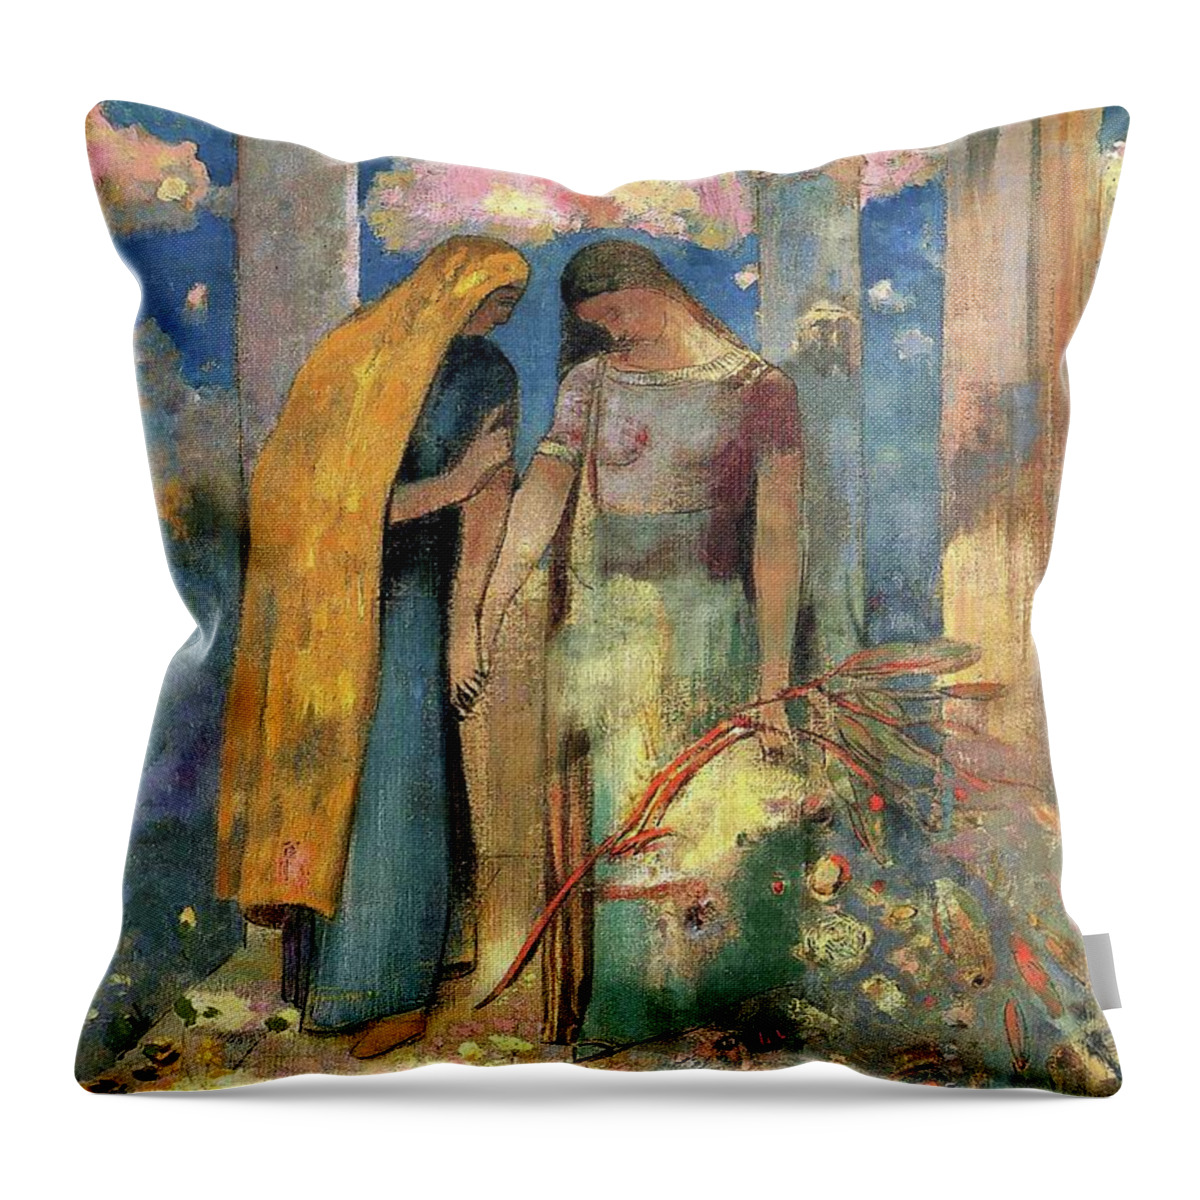 Mystical Conversation Throw Pillow featuring the painting Mystical Conversation #2 by Odilon Redon